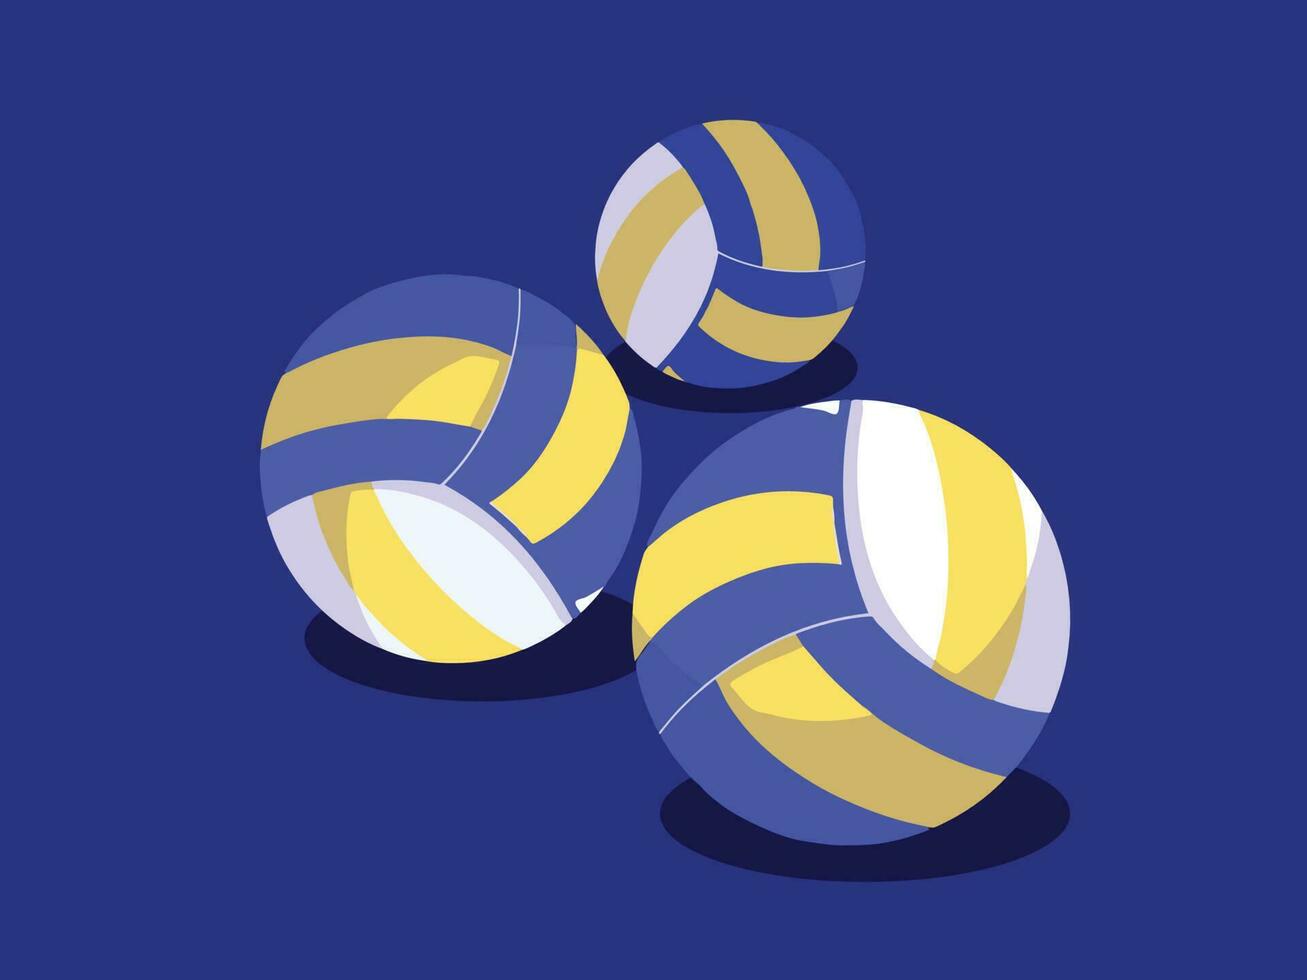 Tres voleo pelotas vector ilustración aislado en oscuro azul horizontal antecedentes. sencillo plano Deportes temática dibujo.